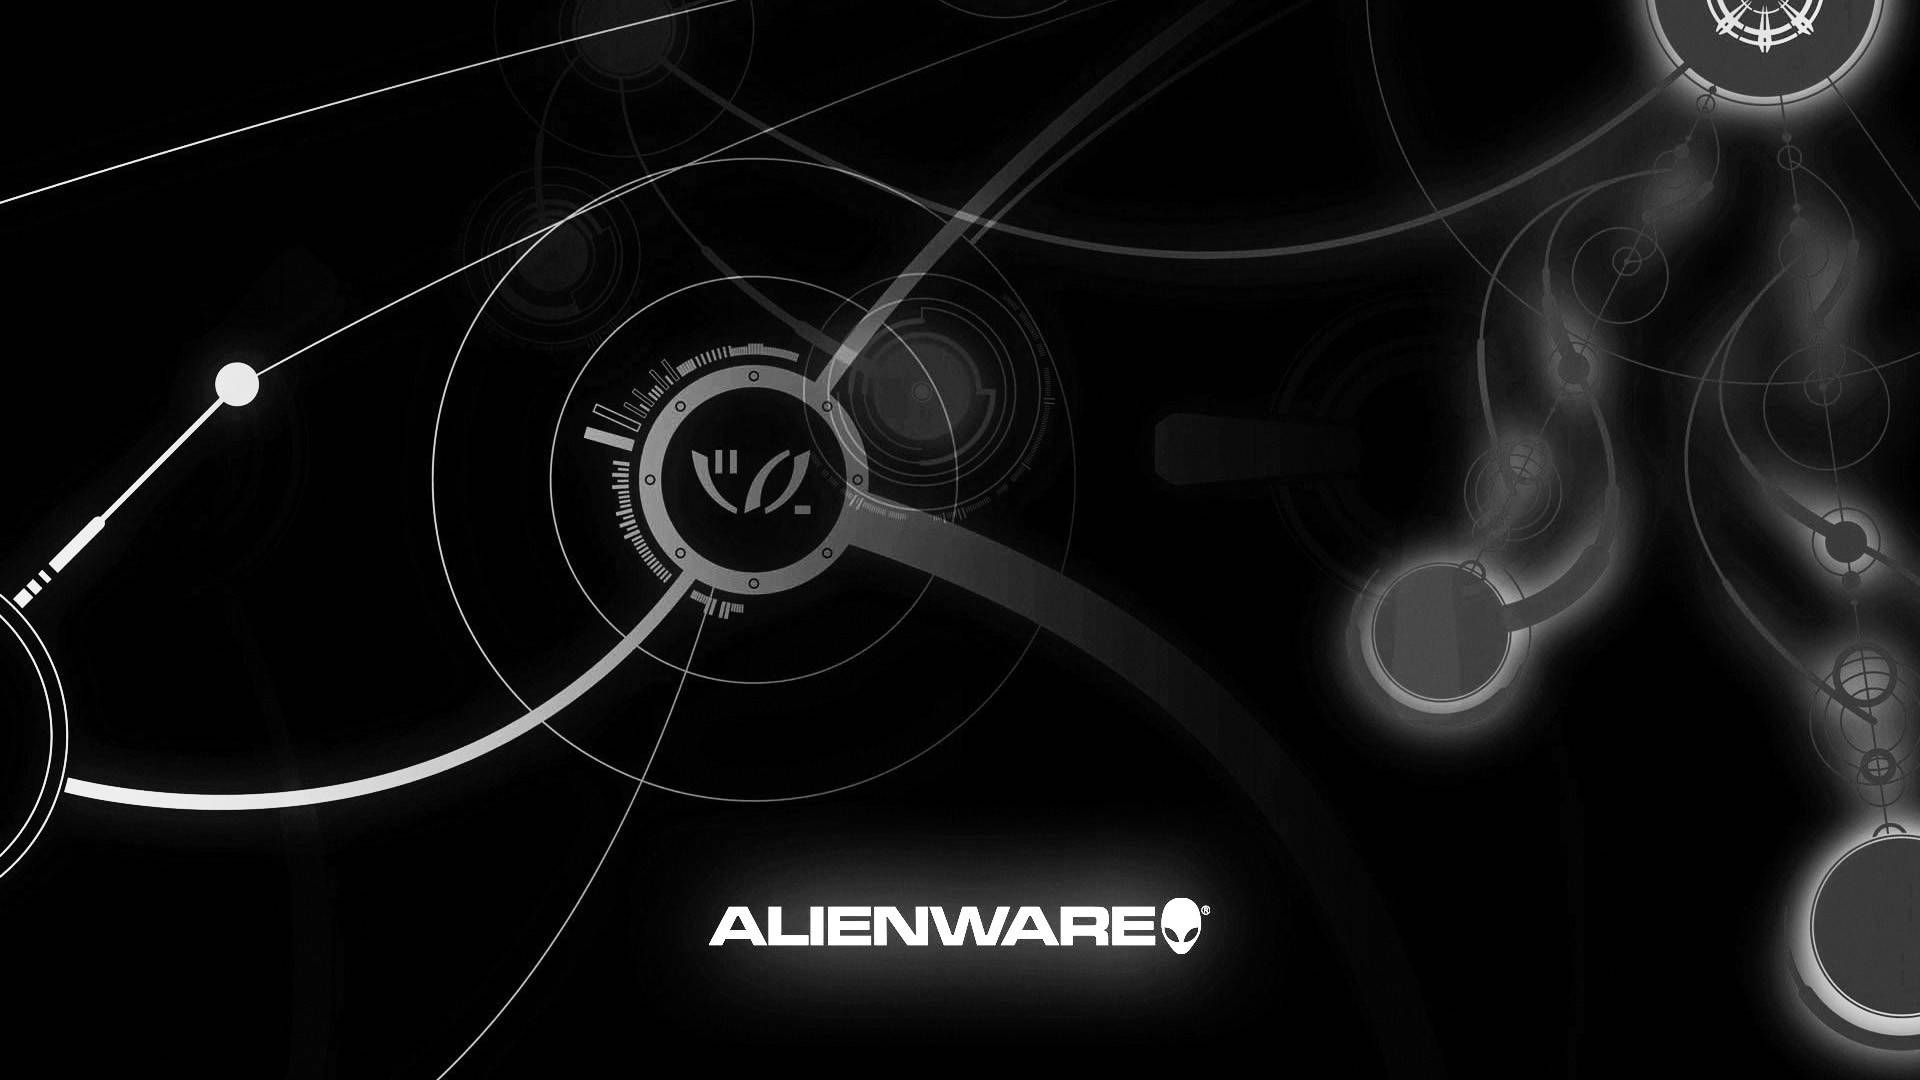 White Alienware Wordmark In Black Theme Background